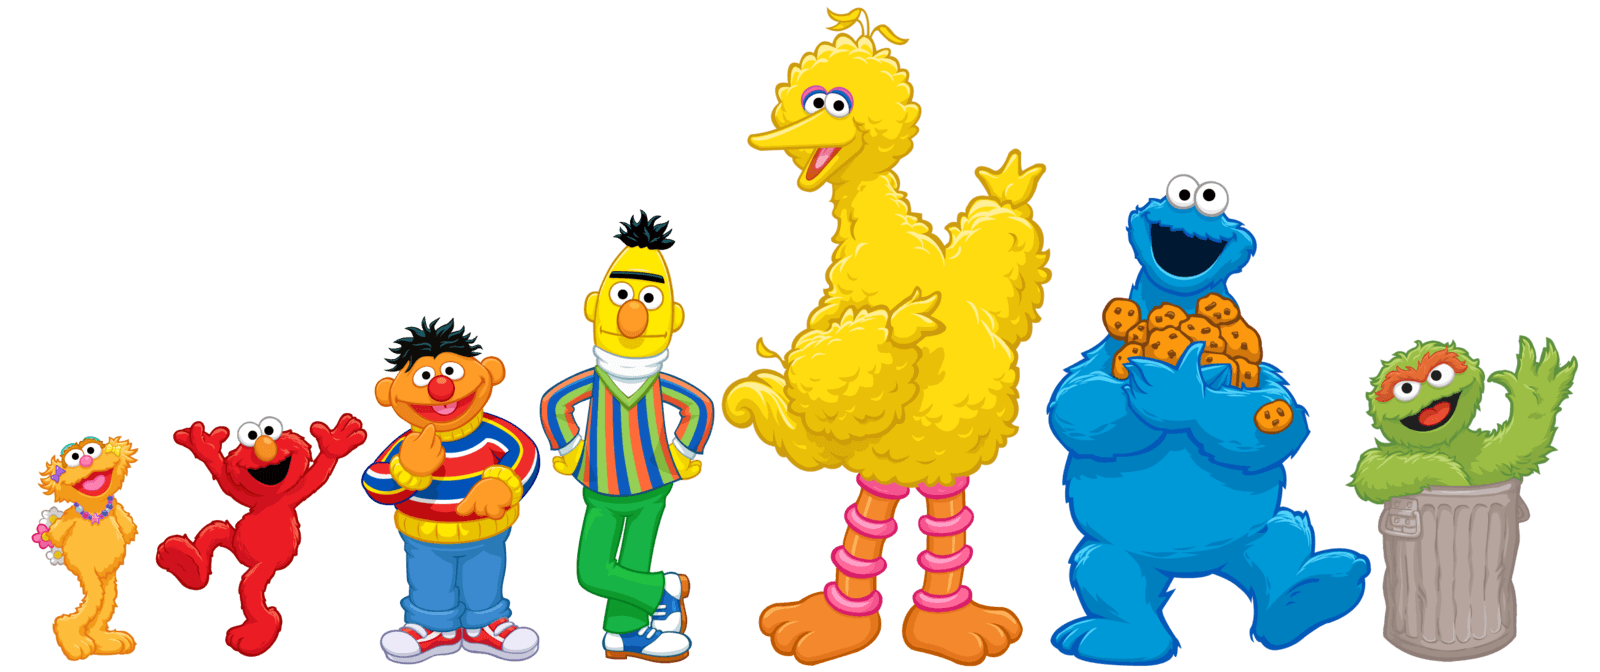 sesame street characters image. Sesame Street Vector Characters